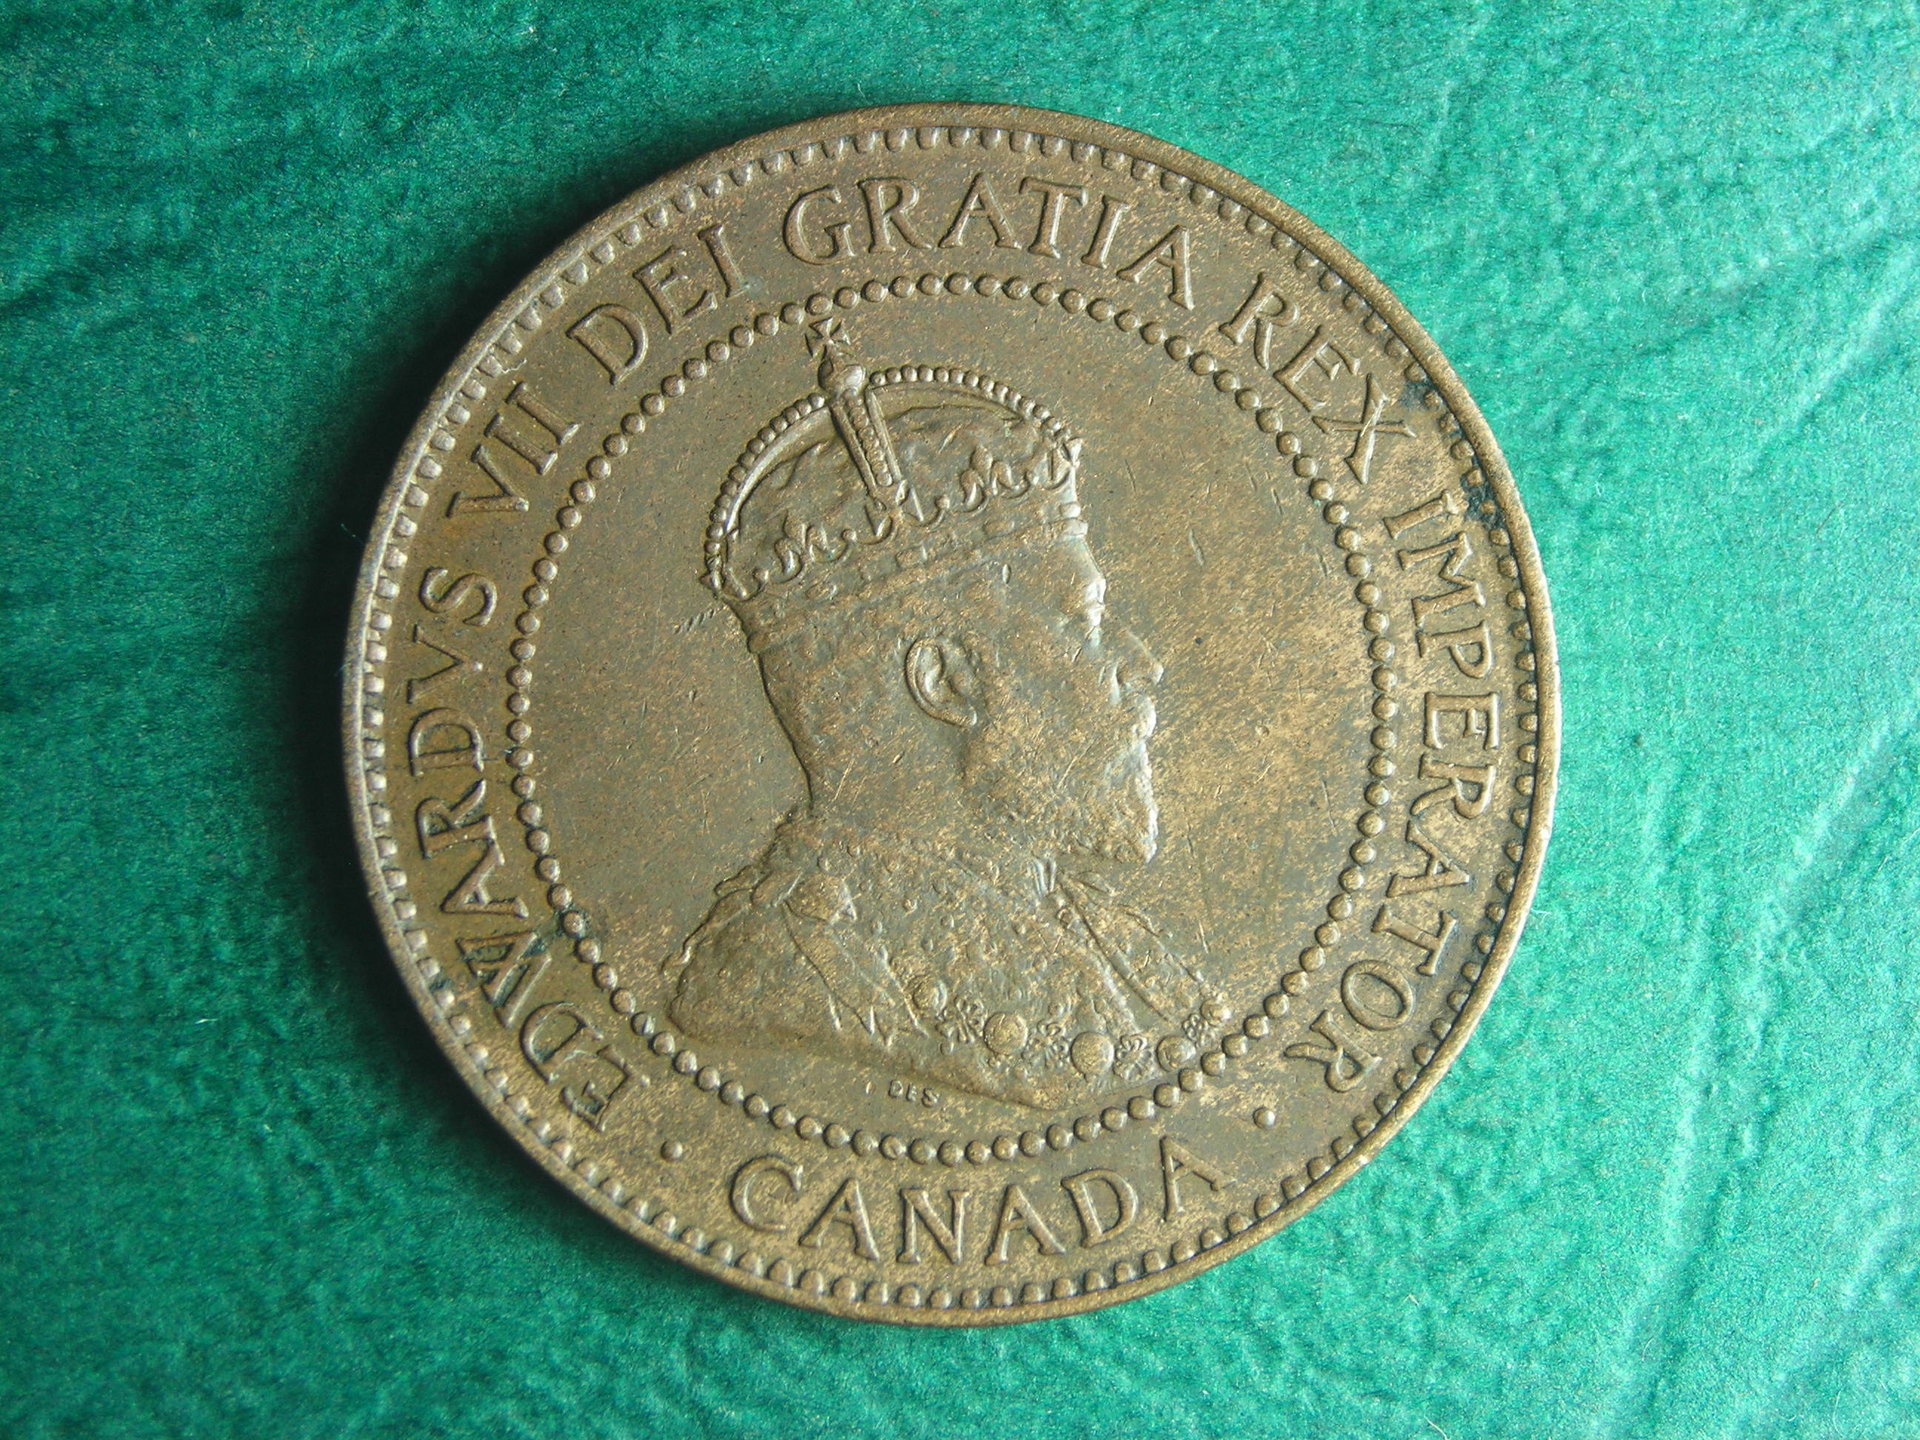 1905 Canada 1 c obv.JPG